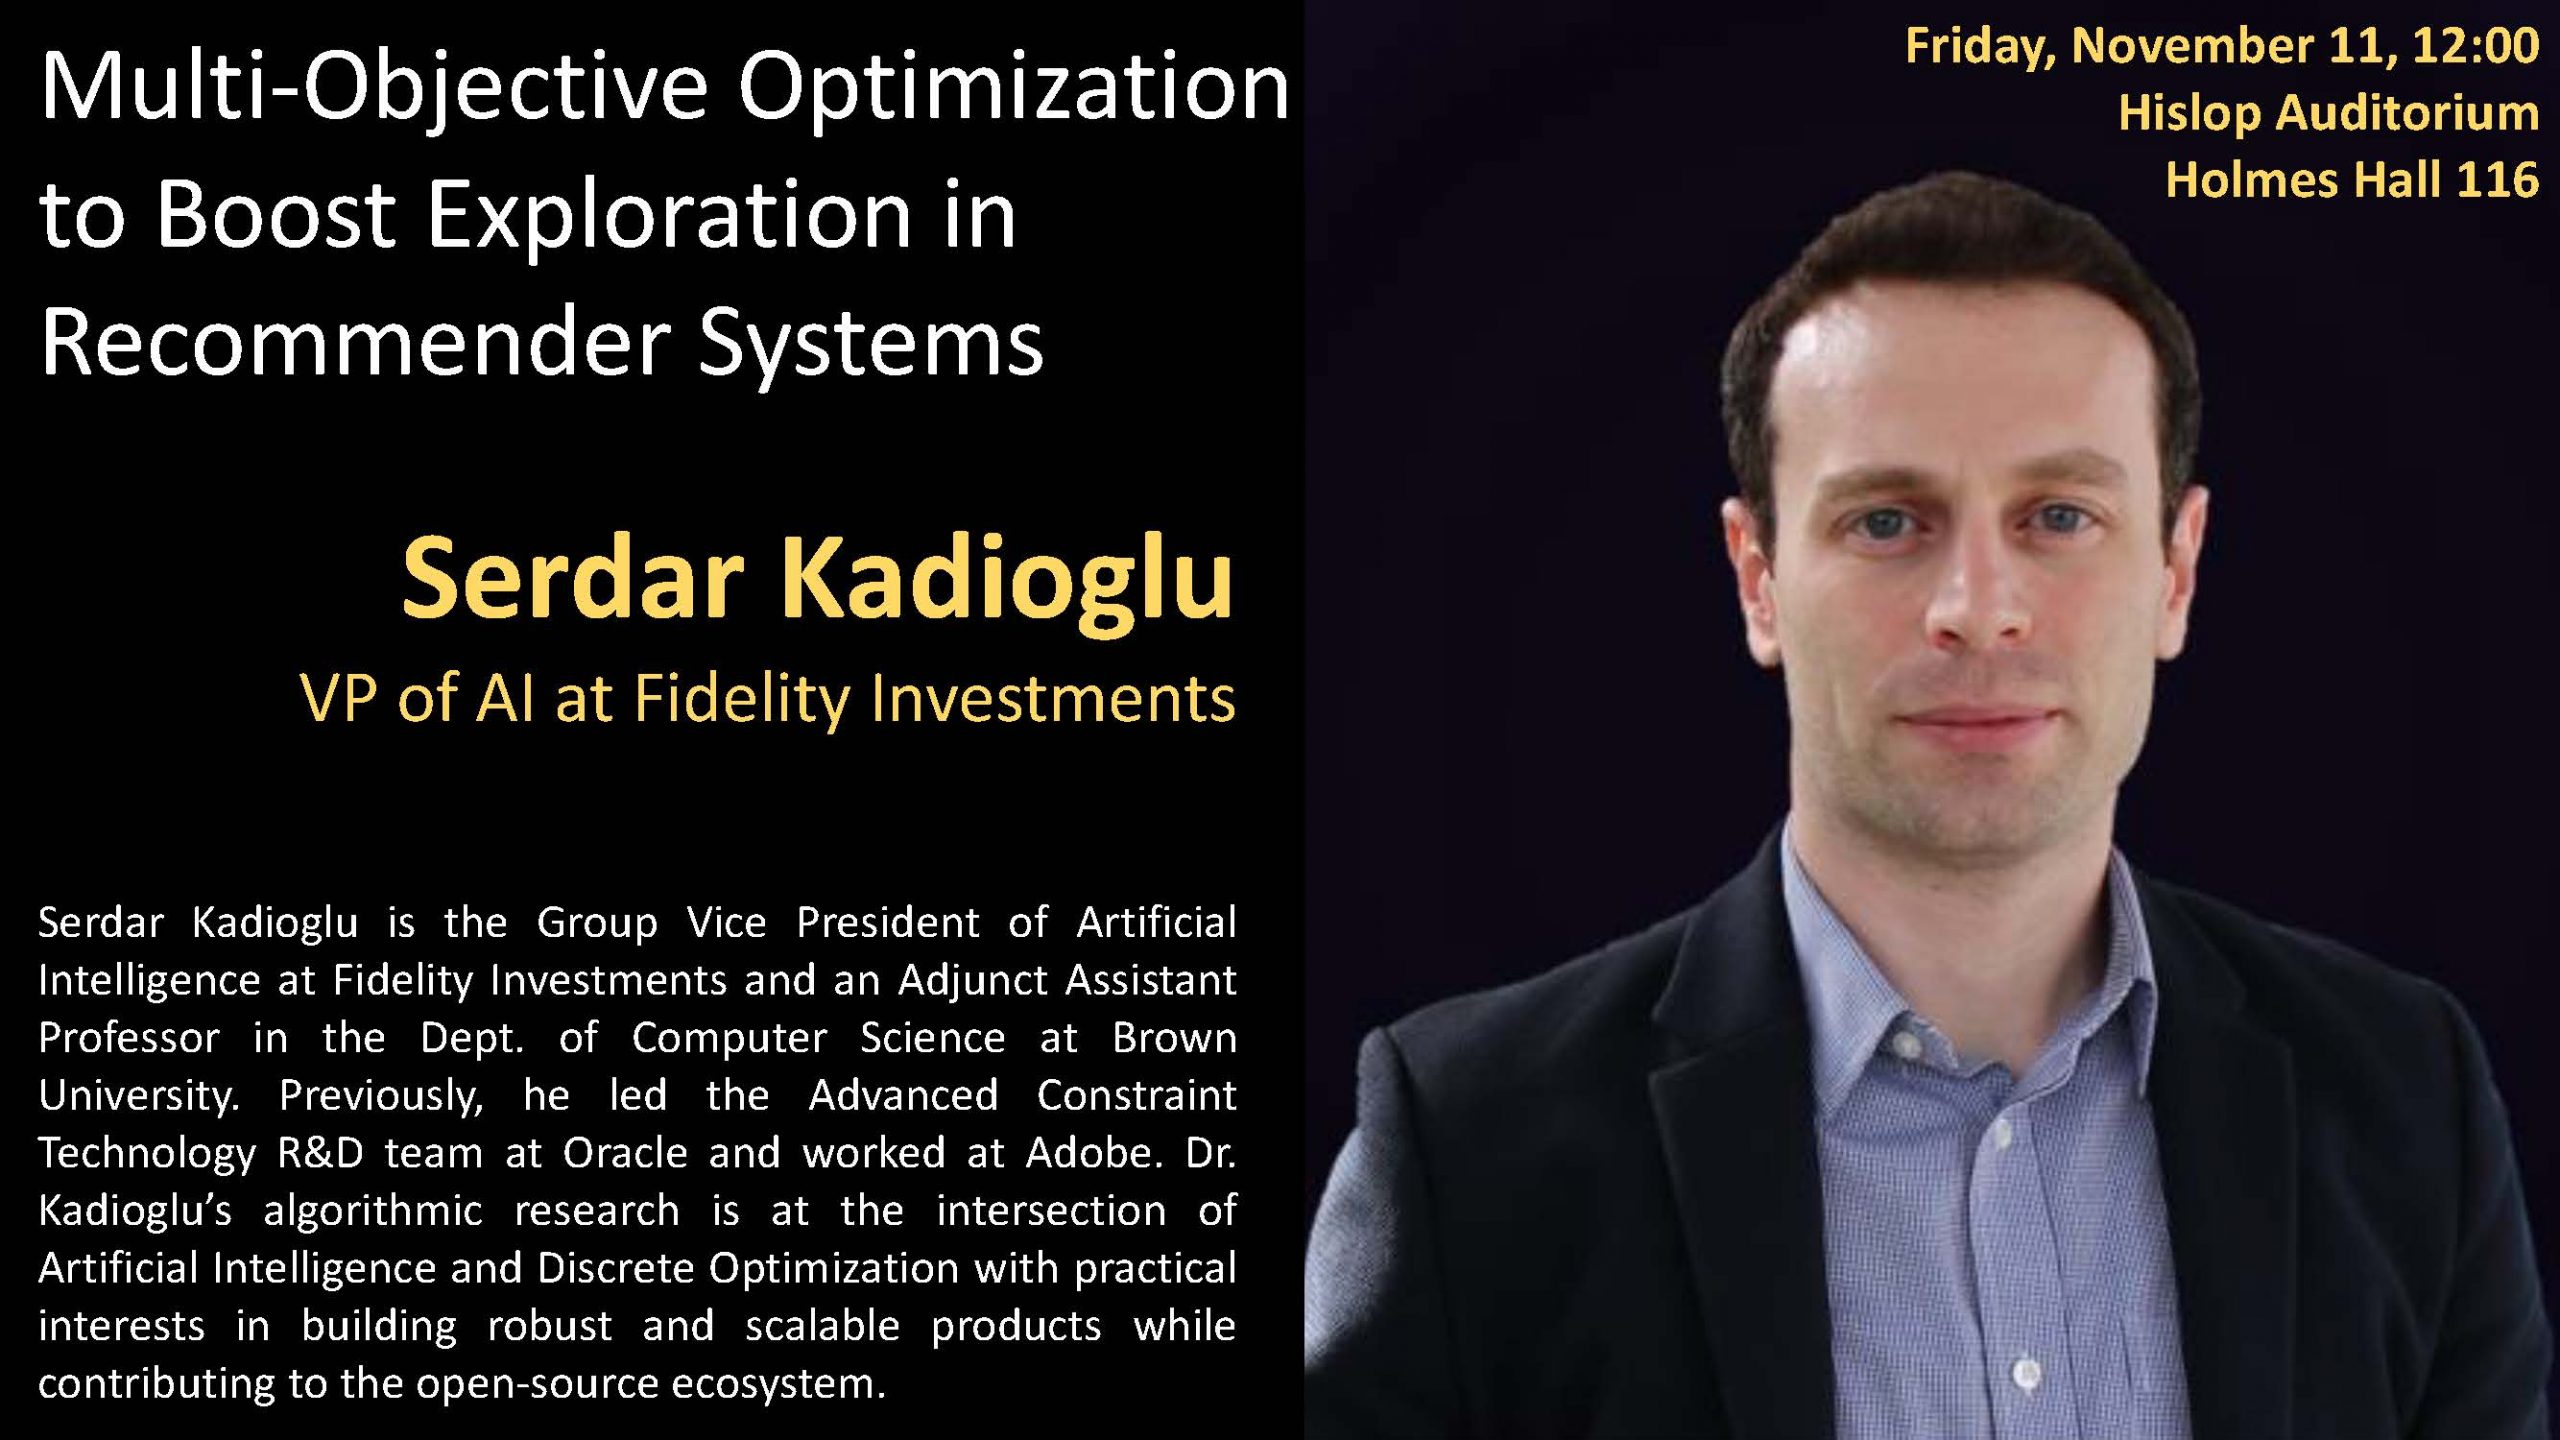 Serdar Kadioglu to speak Friday, November 11th